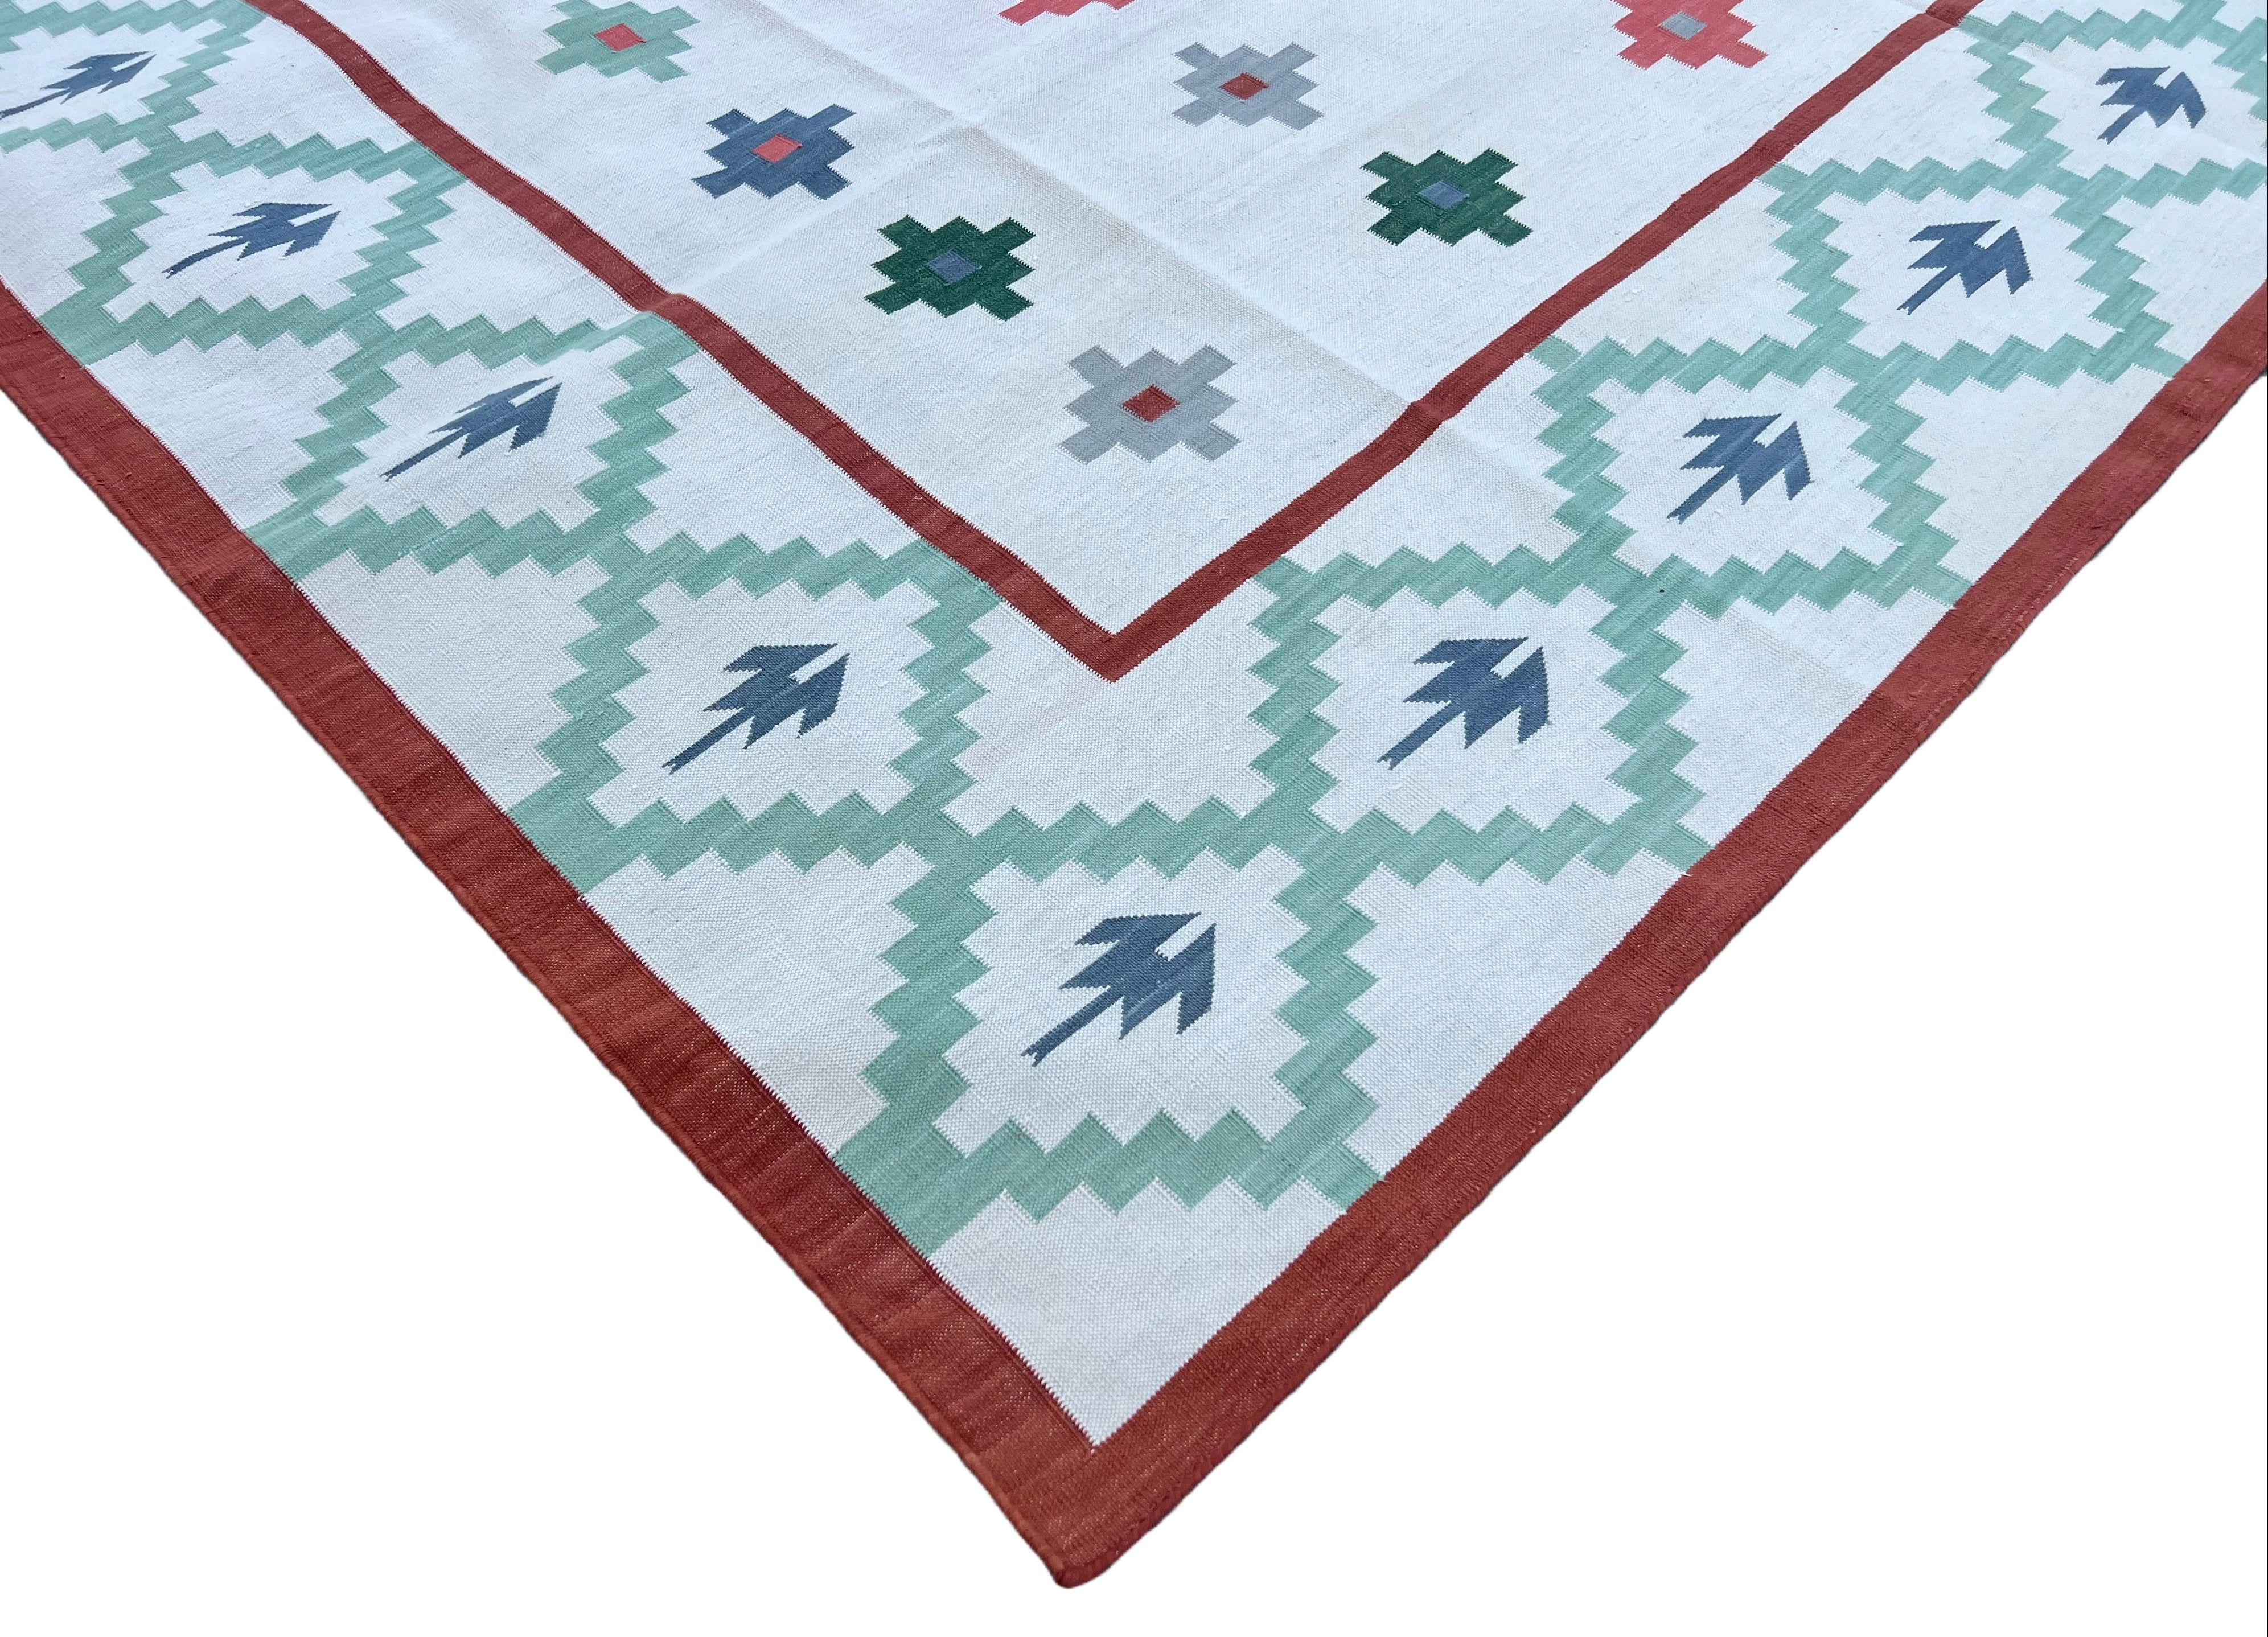 Modern Handmade Cotton Cream, Green And Red Geometric Star Rug-6530